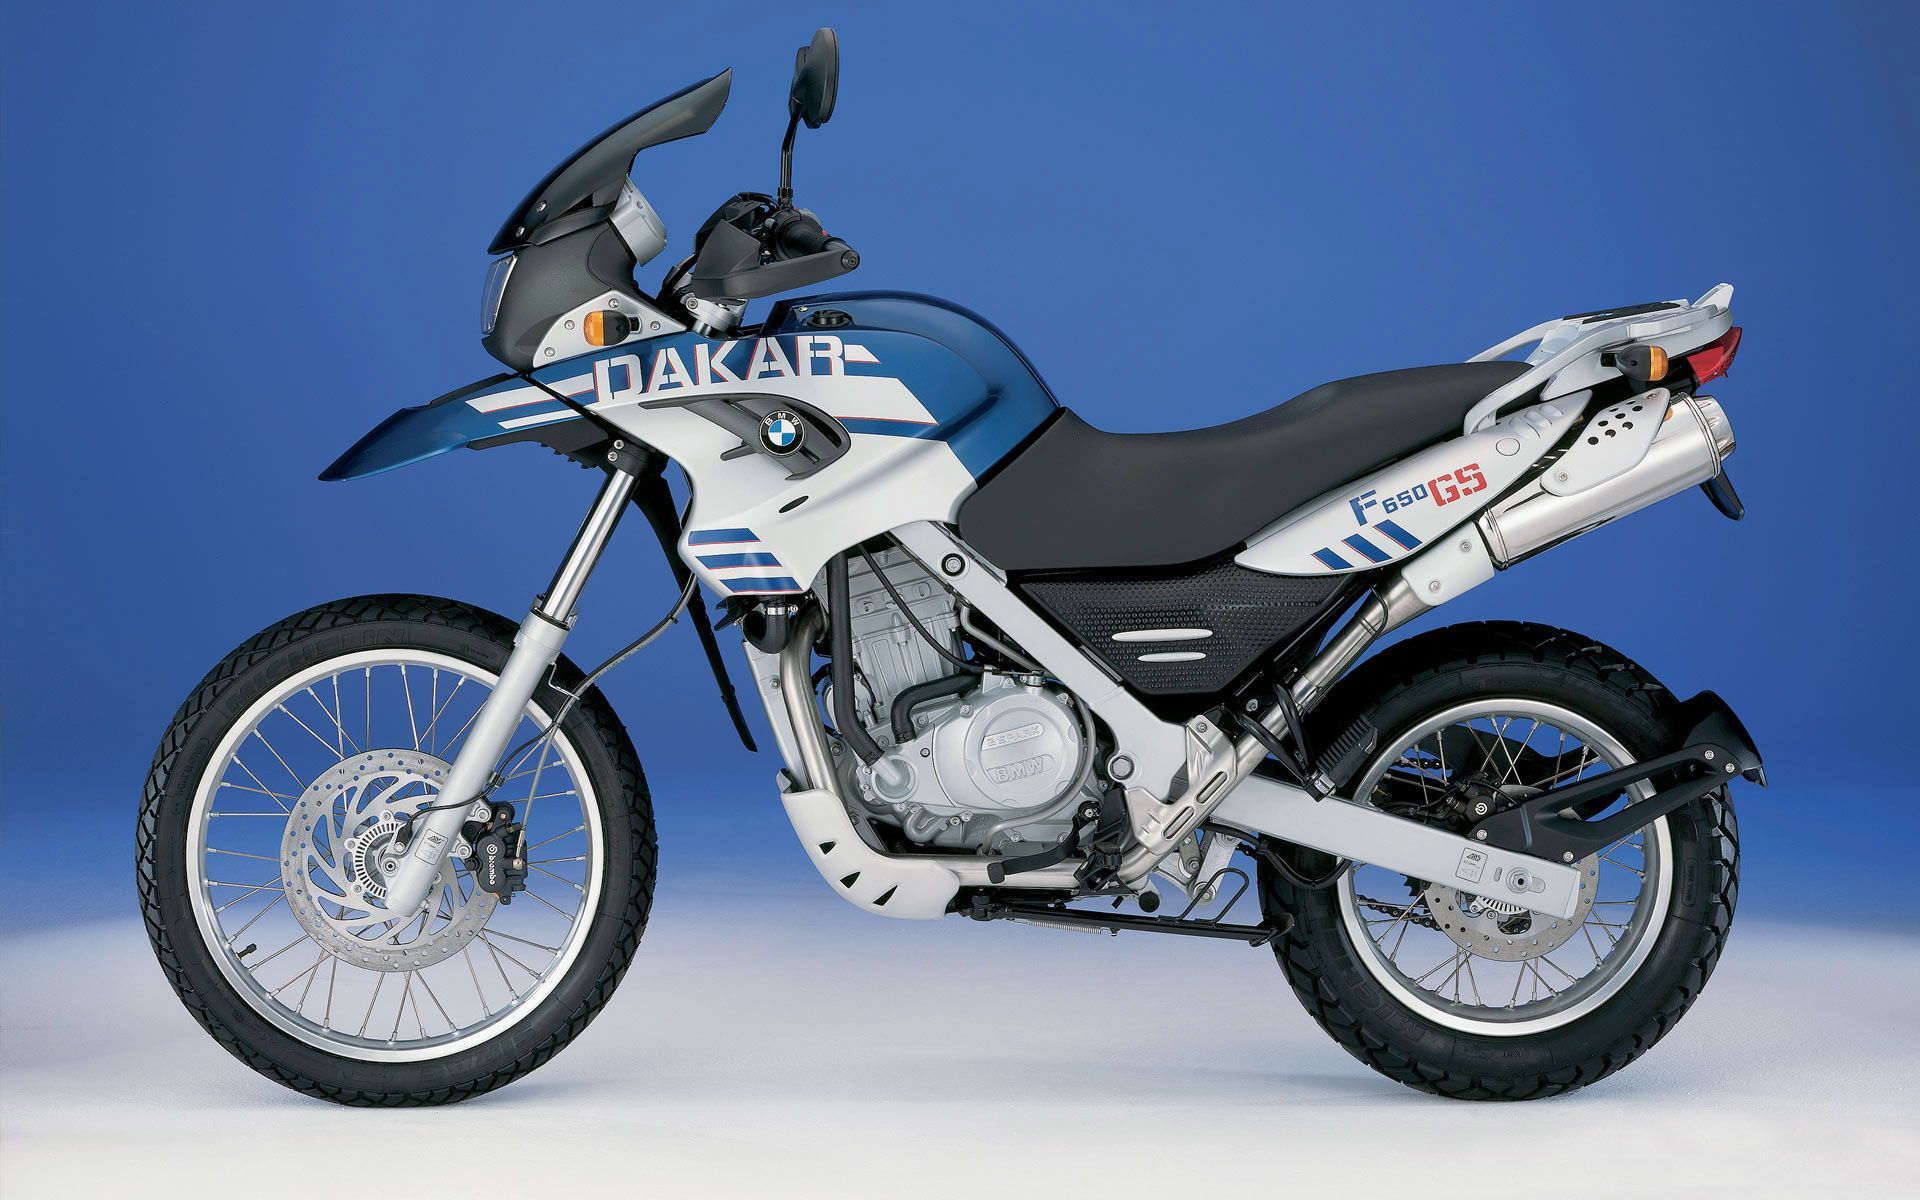 Motorcycle BMW Dakar. Motorcycle, Bmw motorcycles, Bmw